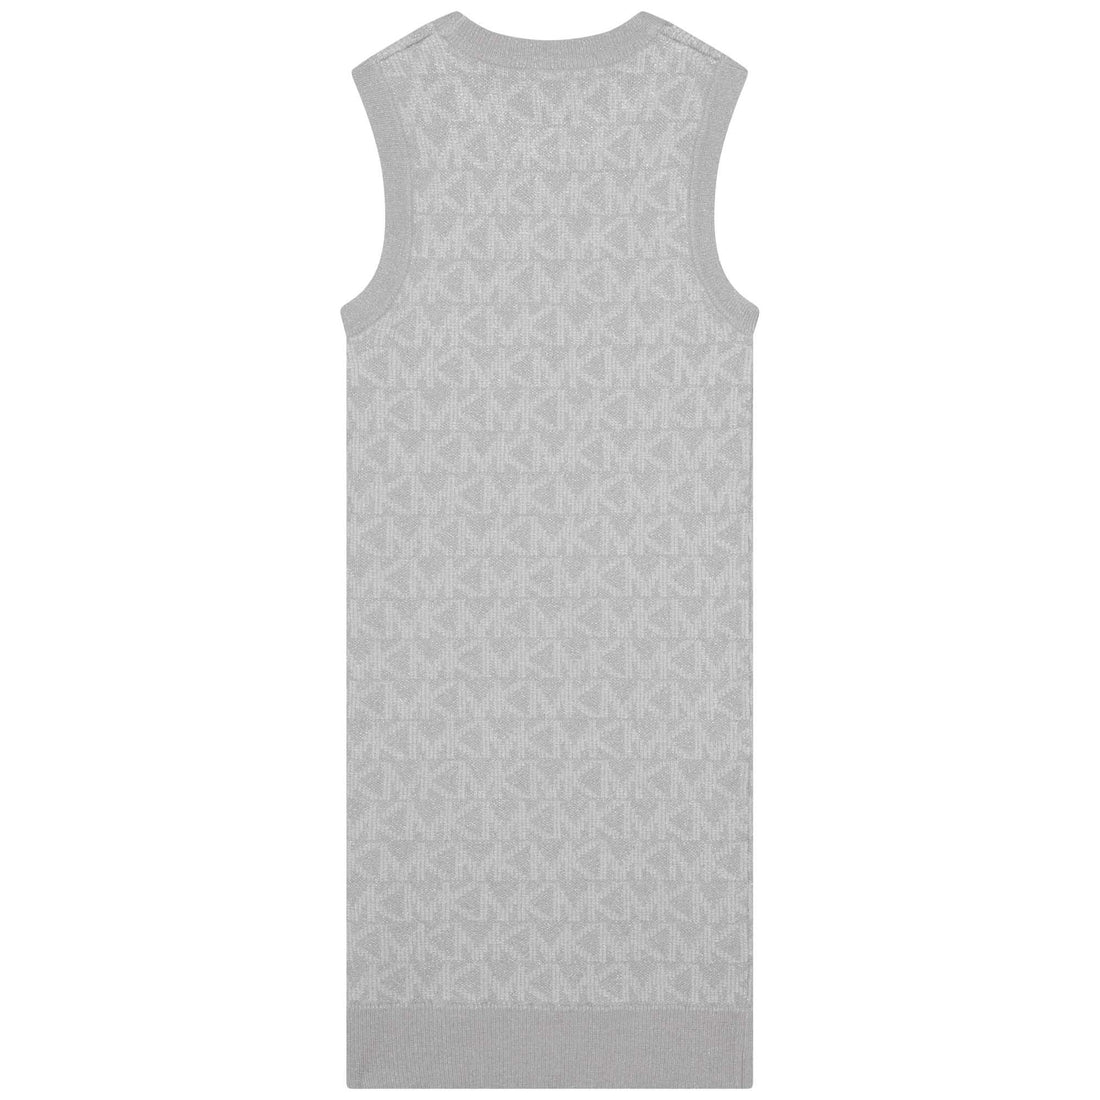 Michael Kors Sleeveless Dress Style: R12150